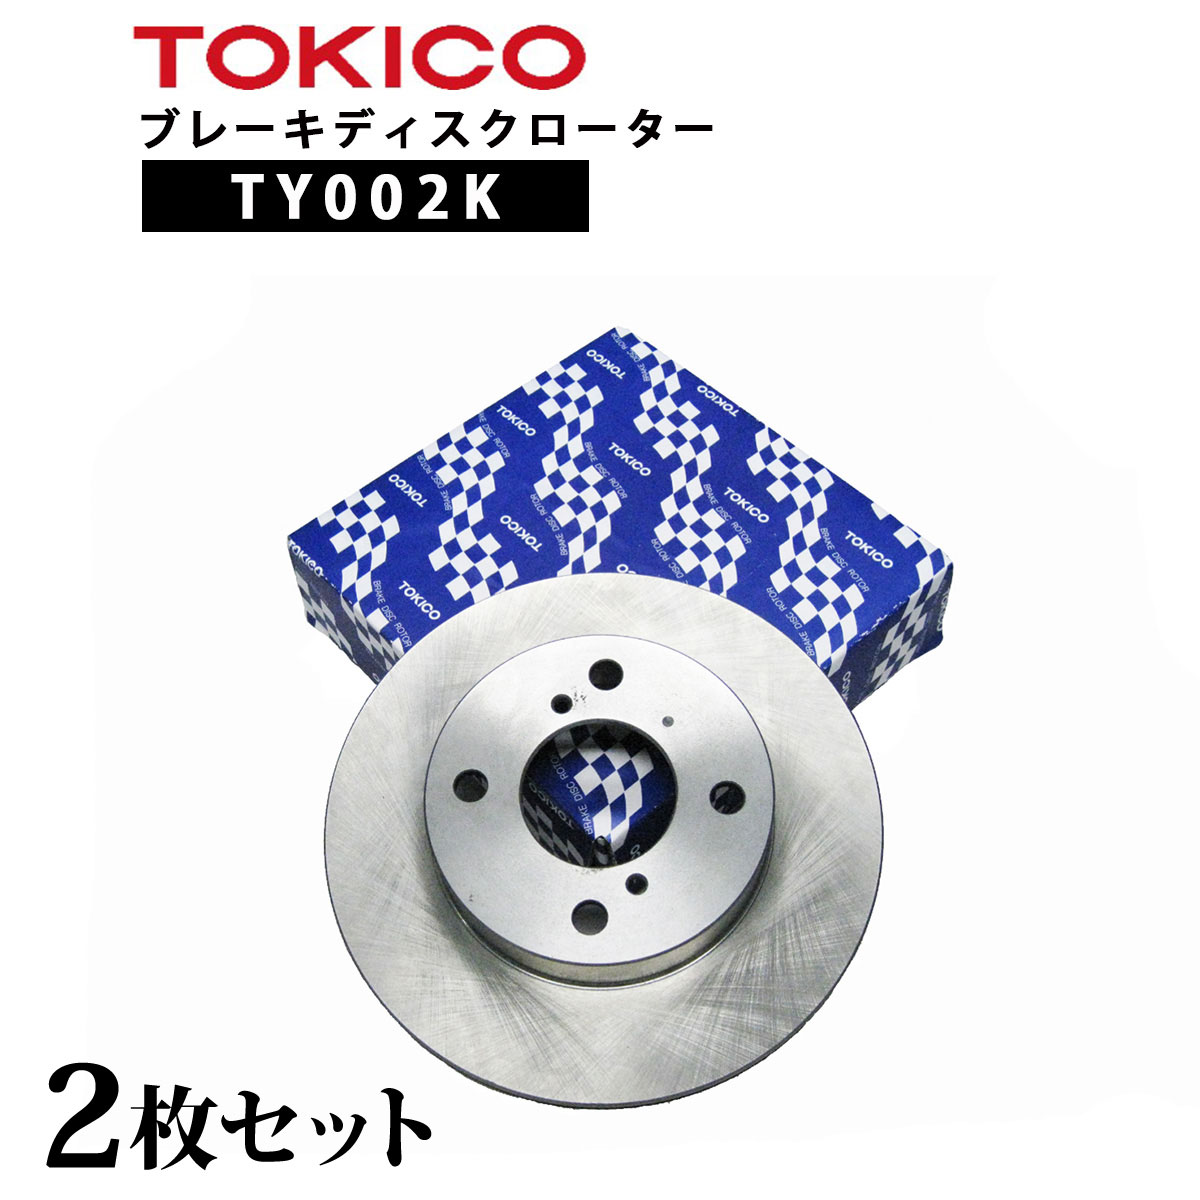 TY002K TOKICO ブレーキディスクローター フロント 2枚 左右セット トキコ 日立| 適合 純正 三菱 MB587247 ミニキャブ F U41T/TP/V U42T/TP/V 他社 BD6759 E6006 C6-013B D6F397J